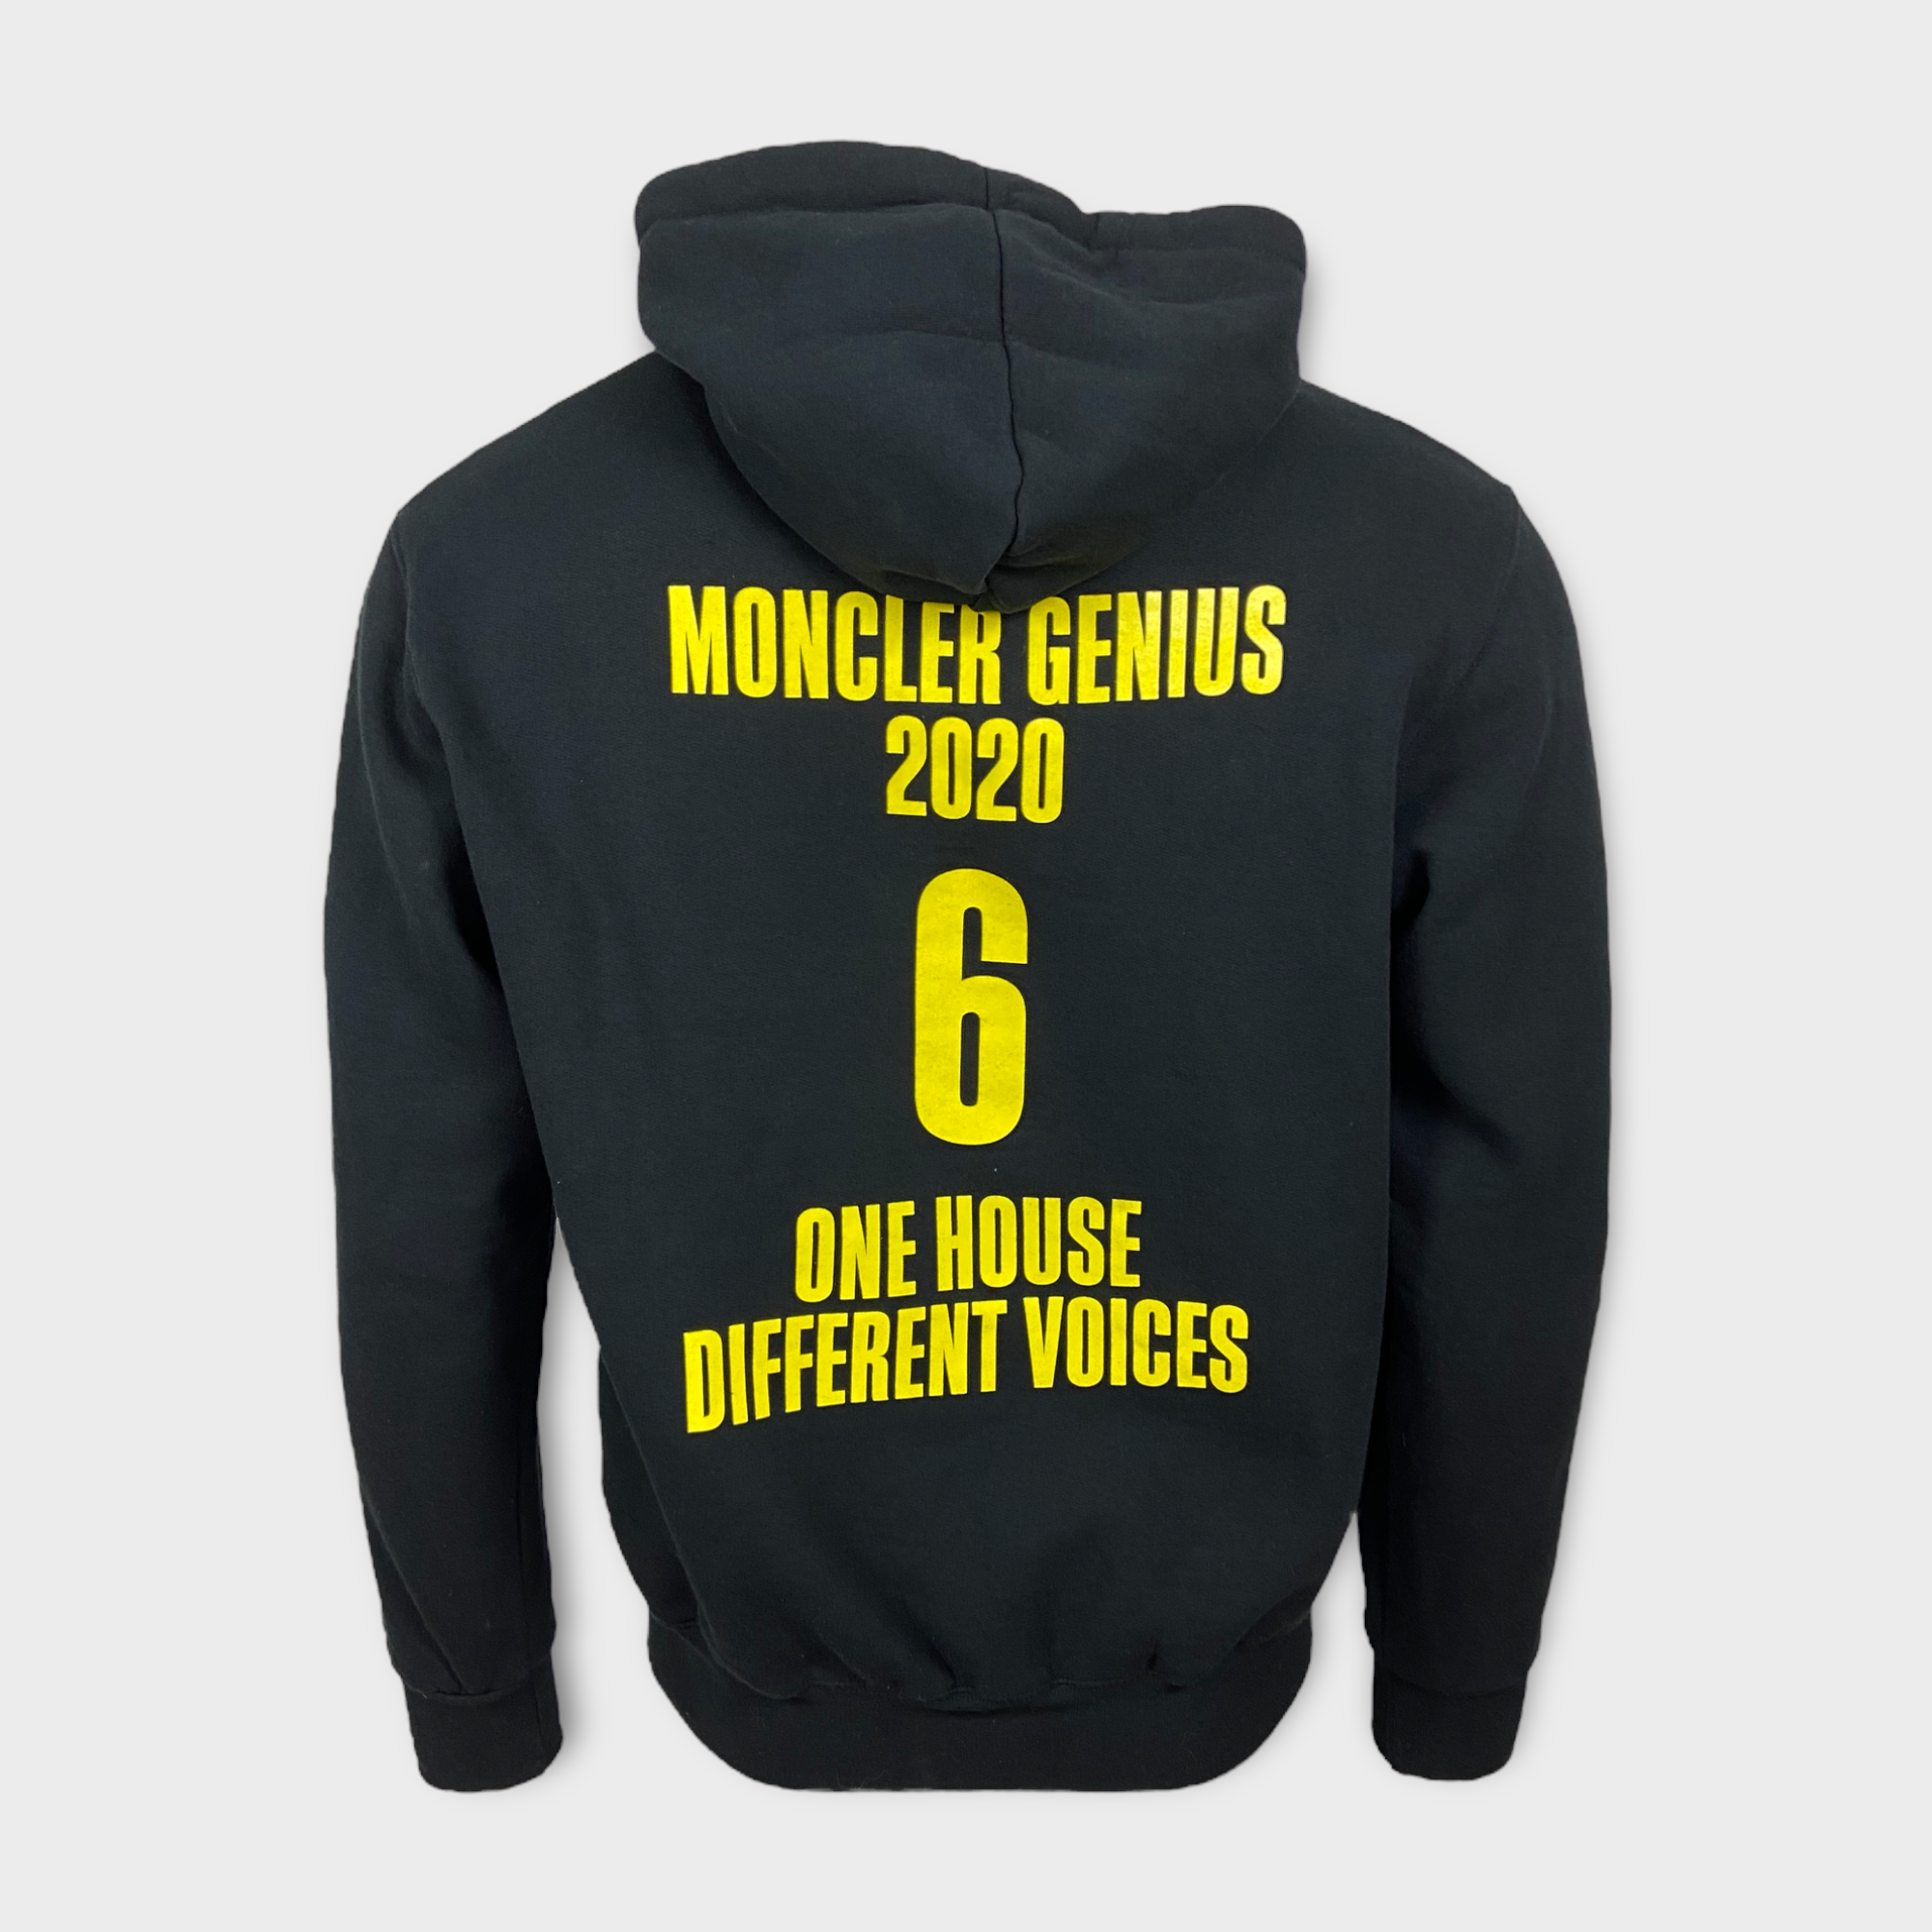 Moncler Genius Event VIP hoodie - Size L (Fits M)